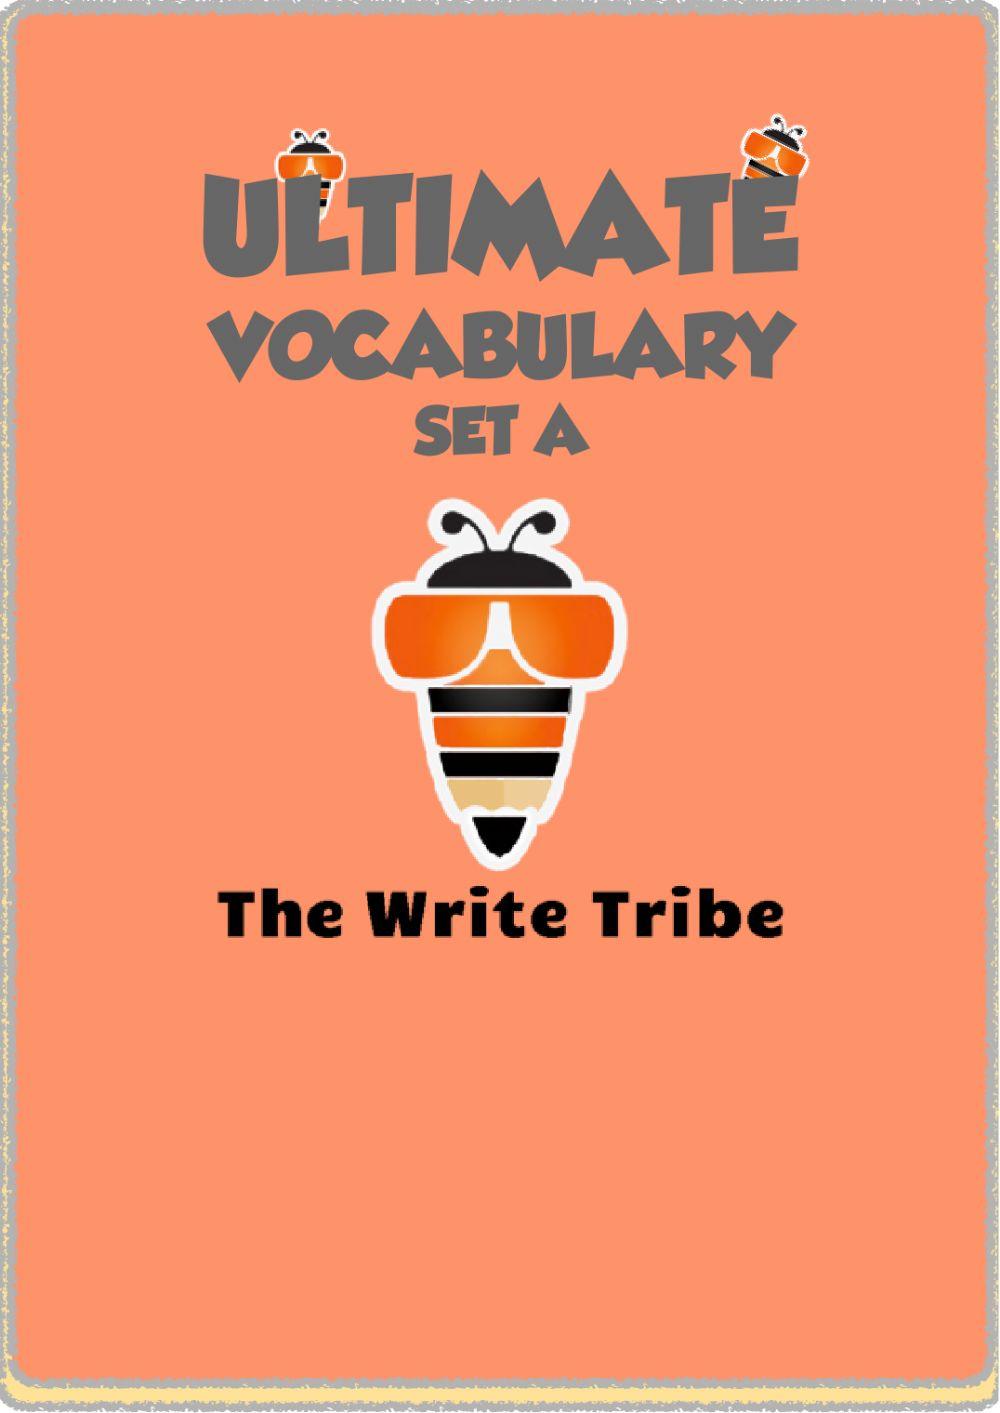 Vocabulary workbook p3-4 Part A